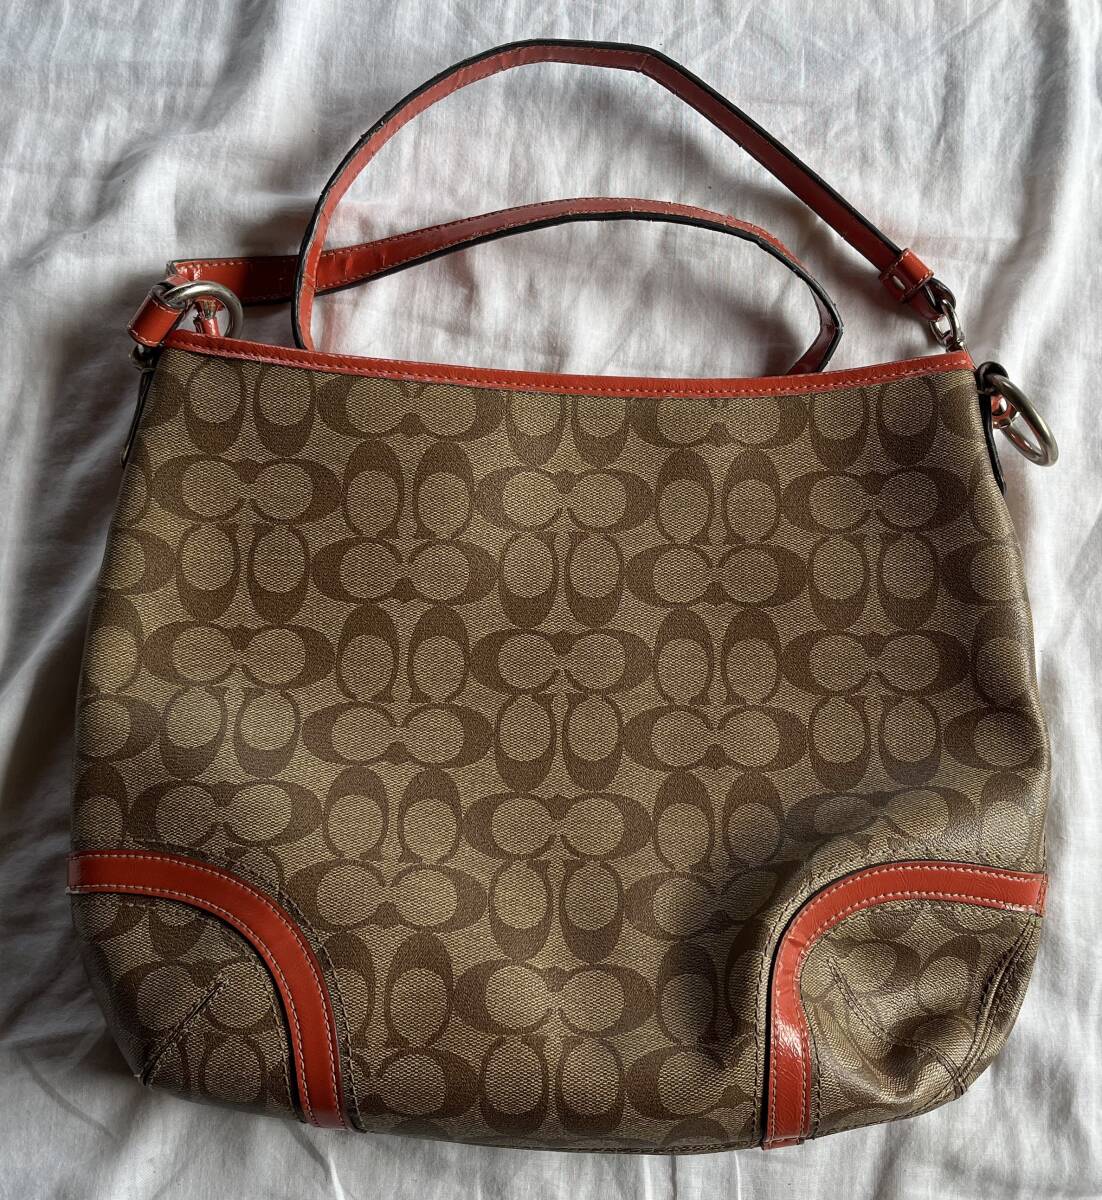  Coach shoulder bag handbag signature standard secondhand goods keep hand verification 